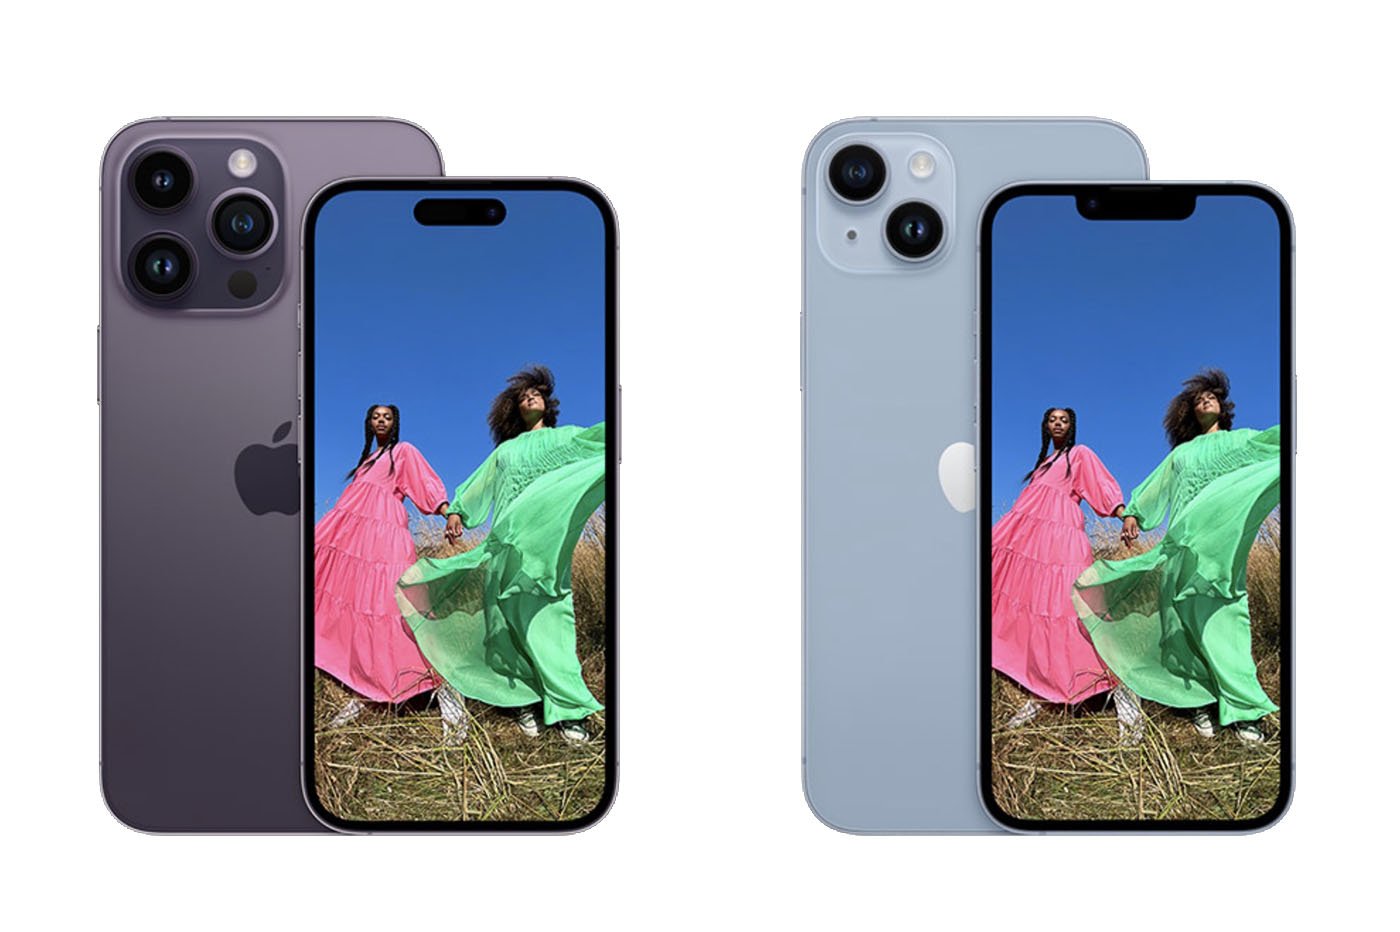 iPhone 11, iPhone 11 Pro et iPhone Pro Max : comparatif des prix